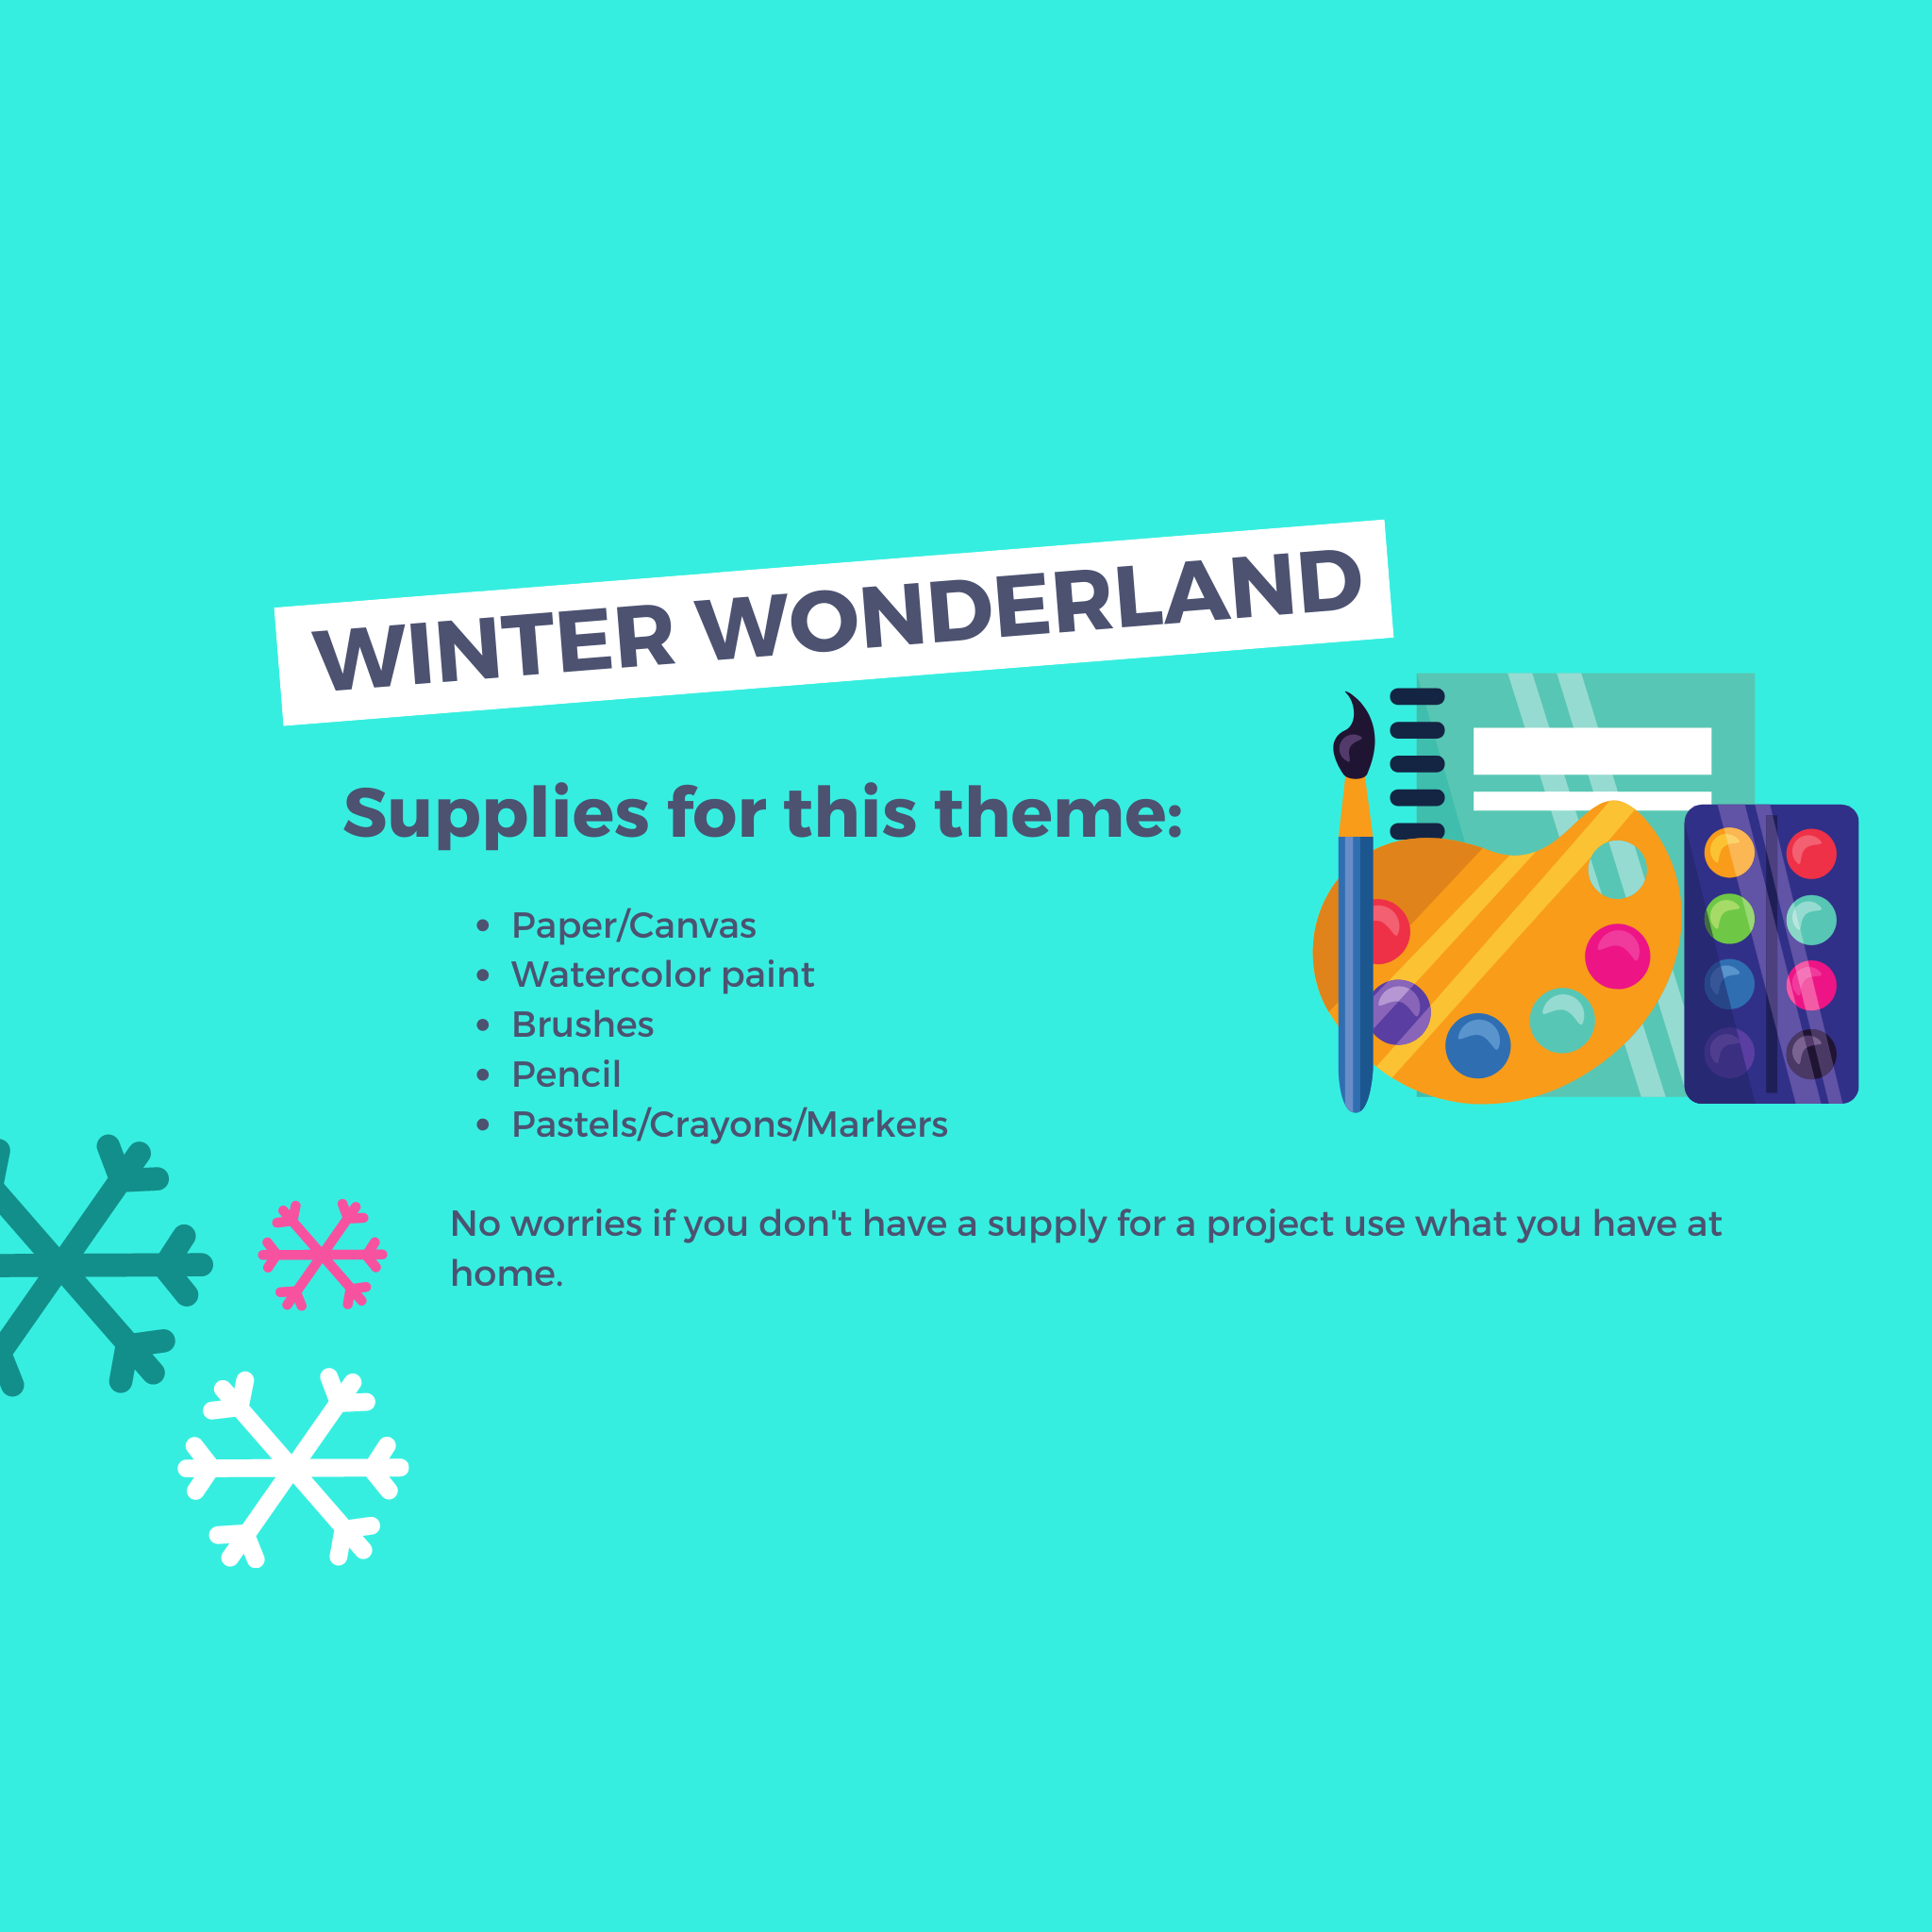 Winter Wonderland Step-By-Step Instructions